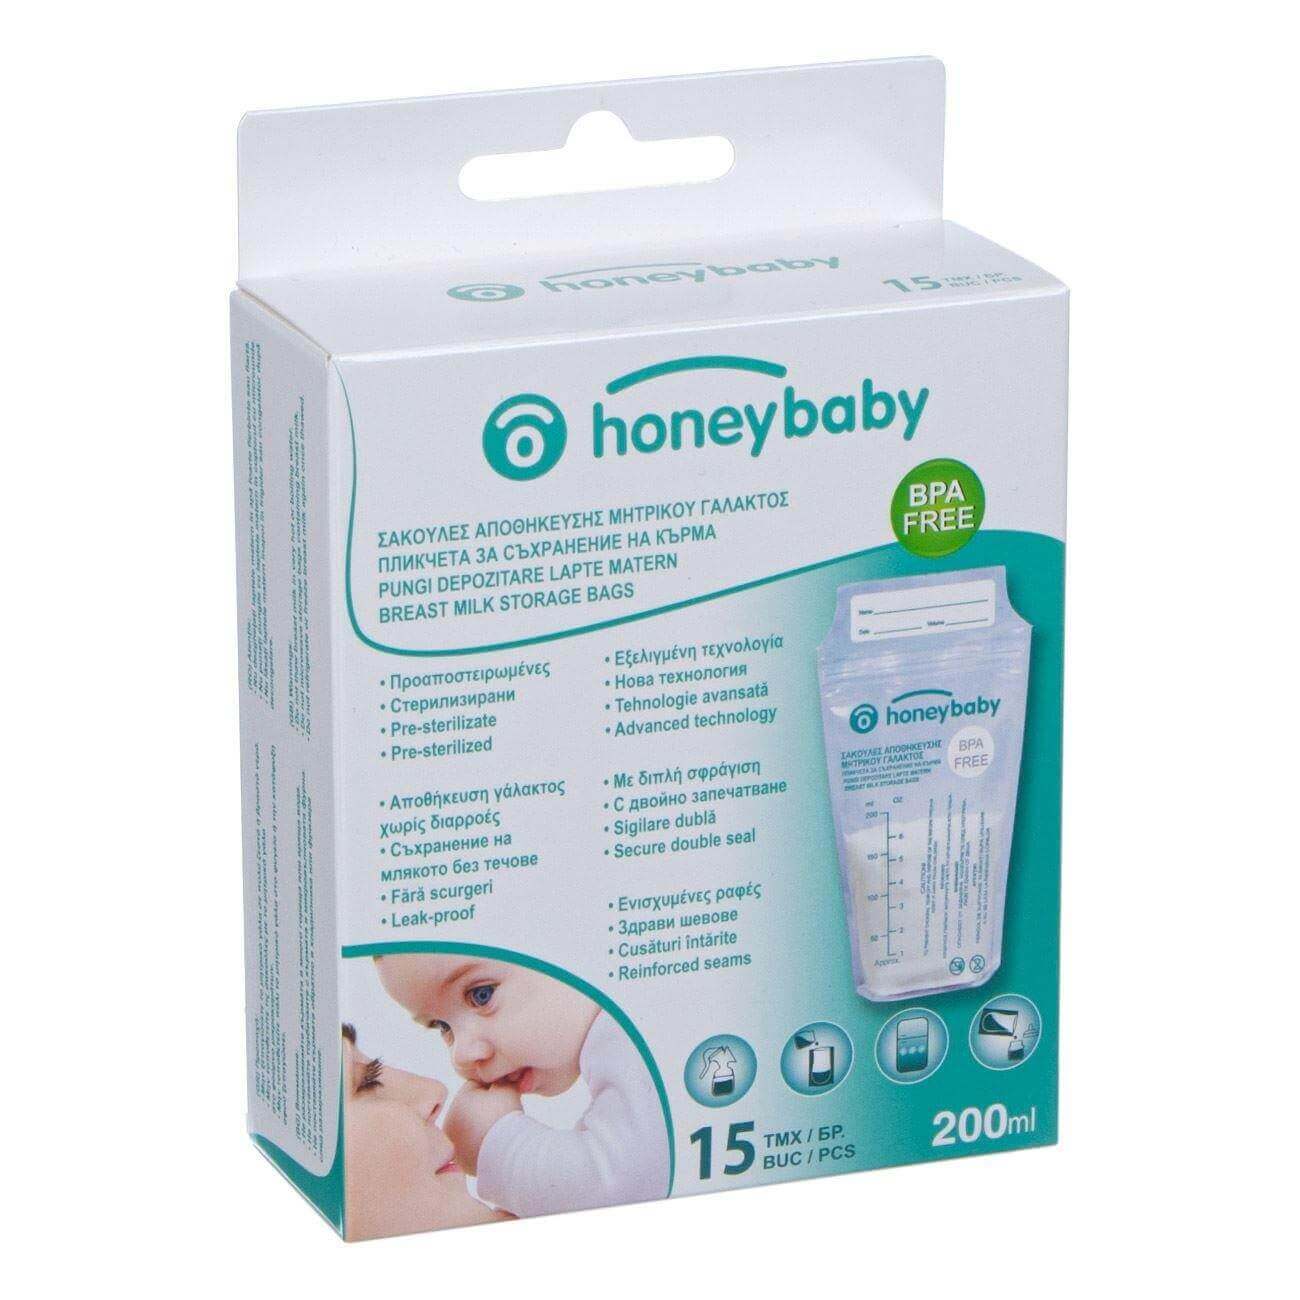 Pungi Stocare Lapte Matern HoneyBaby infant-ro